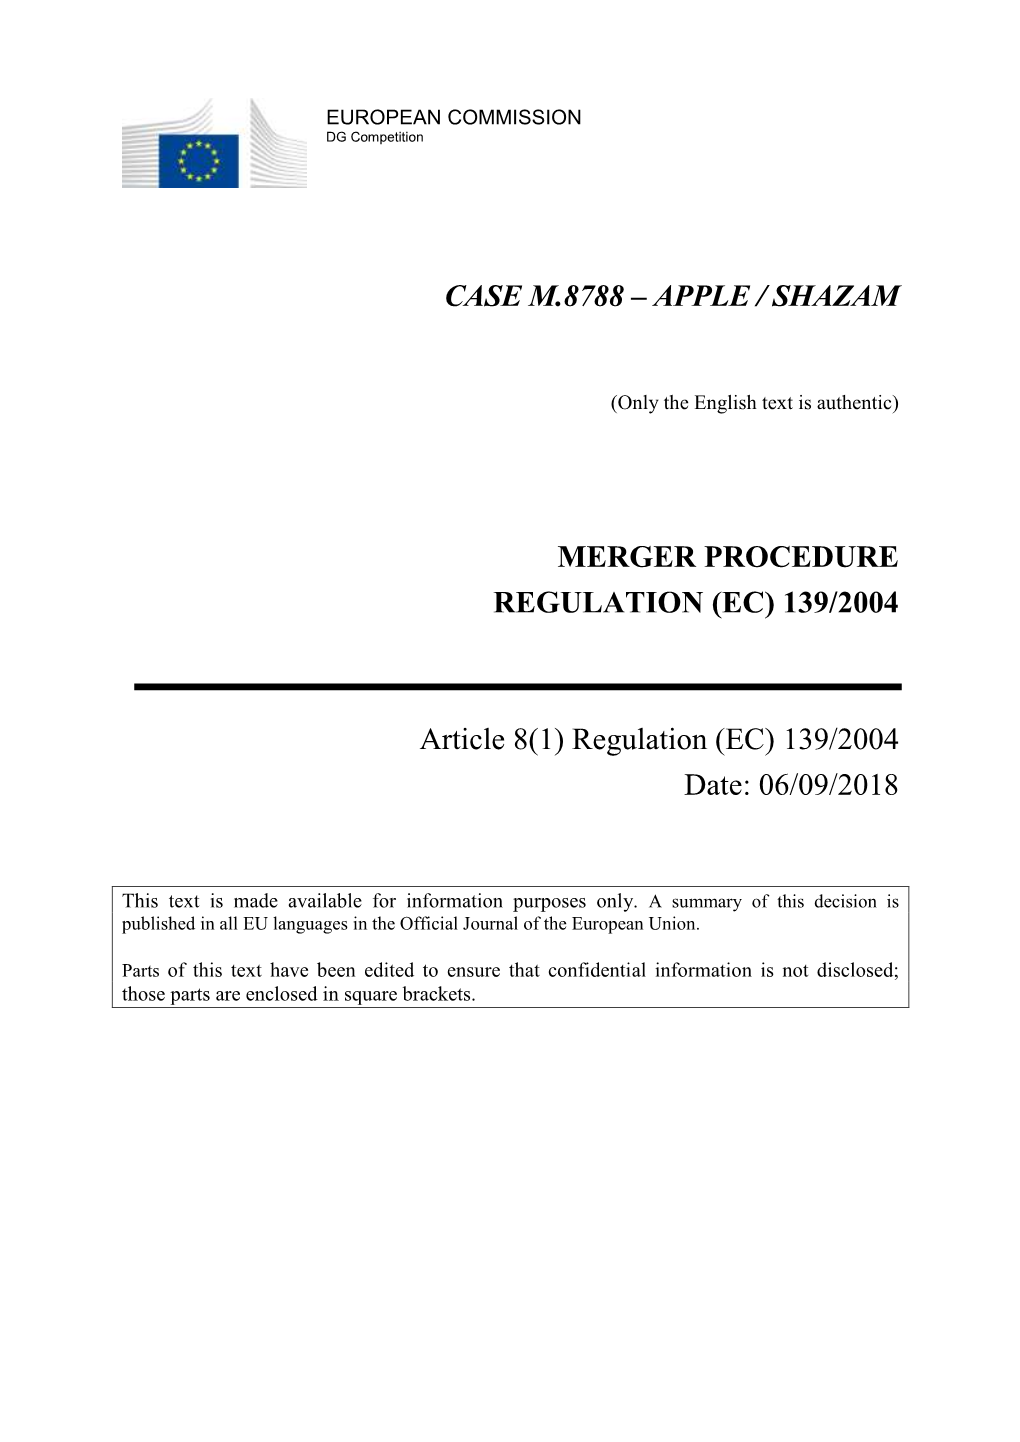 Apple / Shazam Merger Procedure Regulation (Ec)